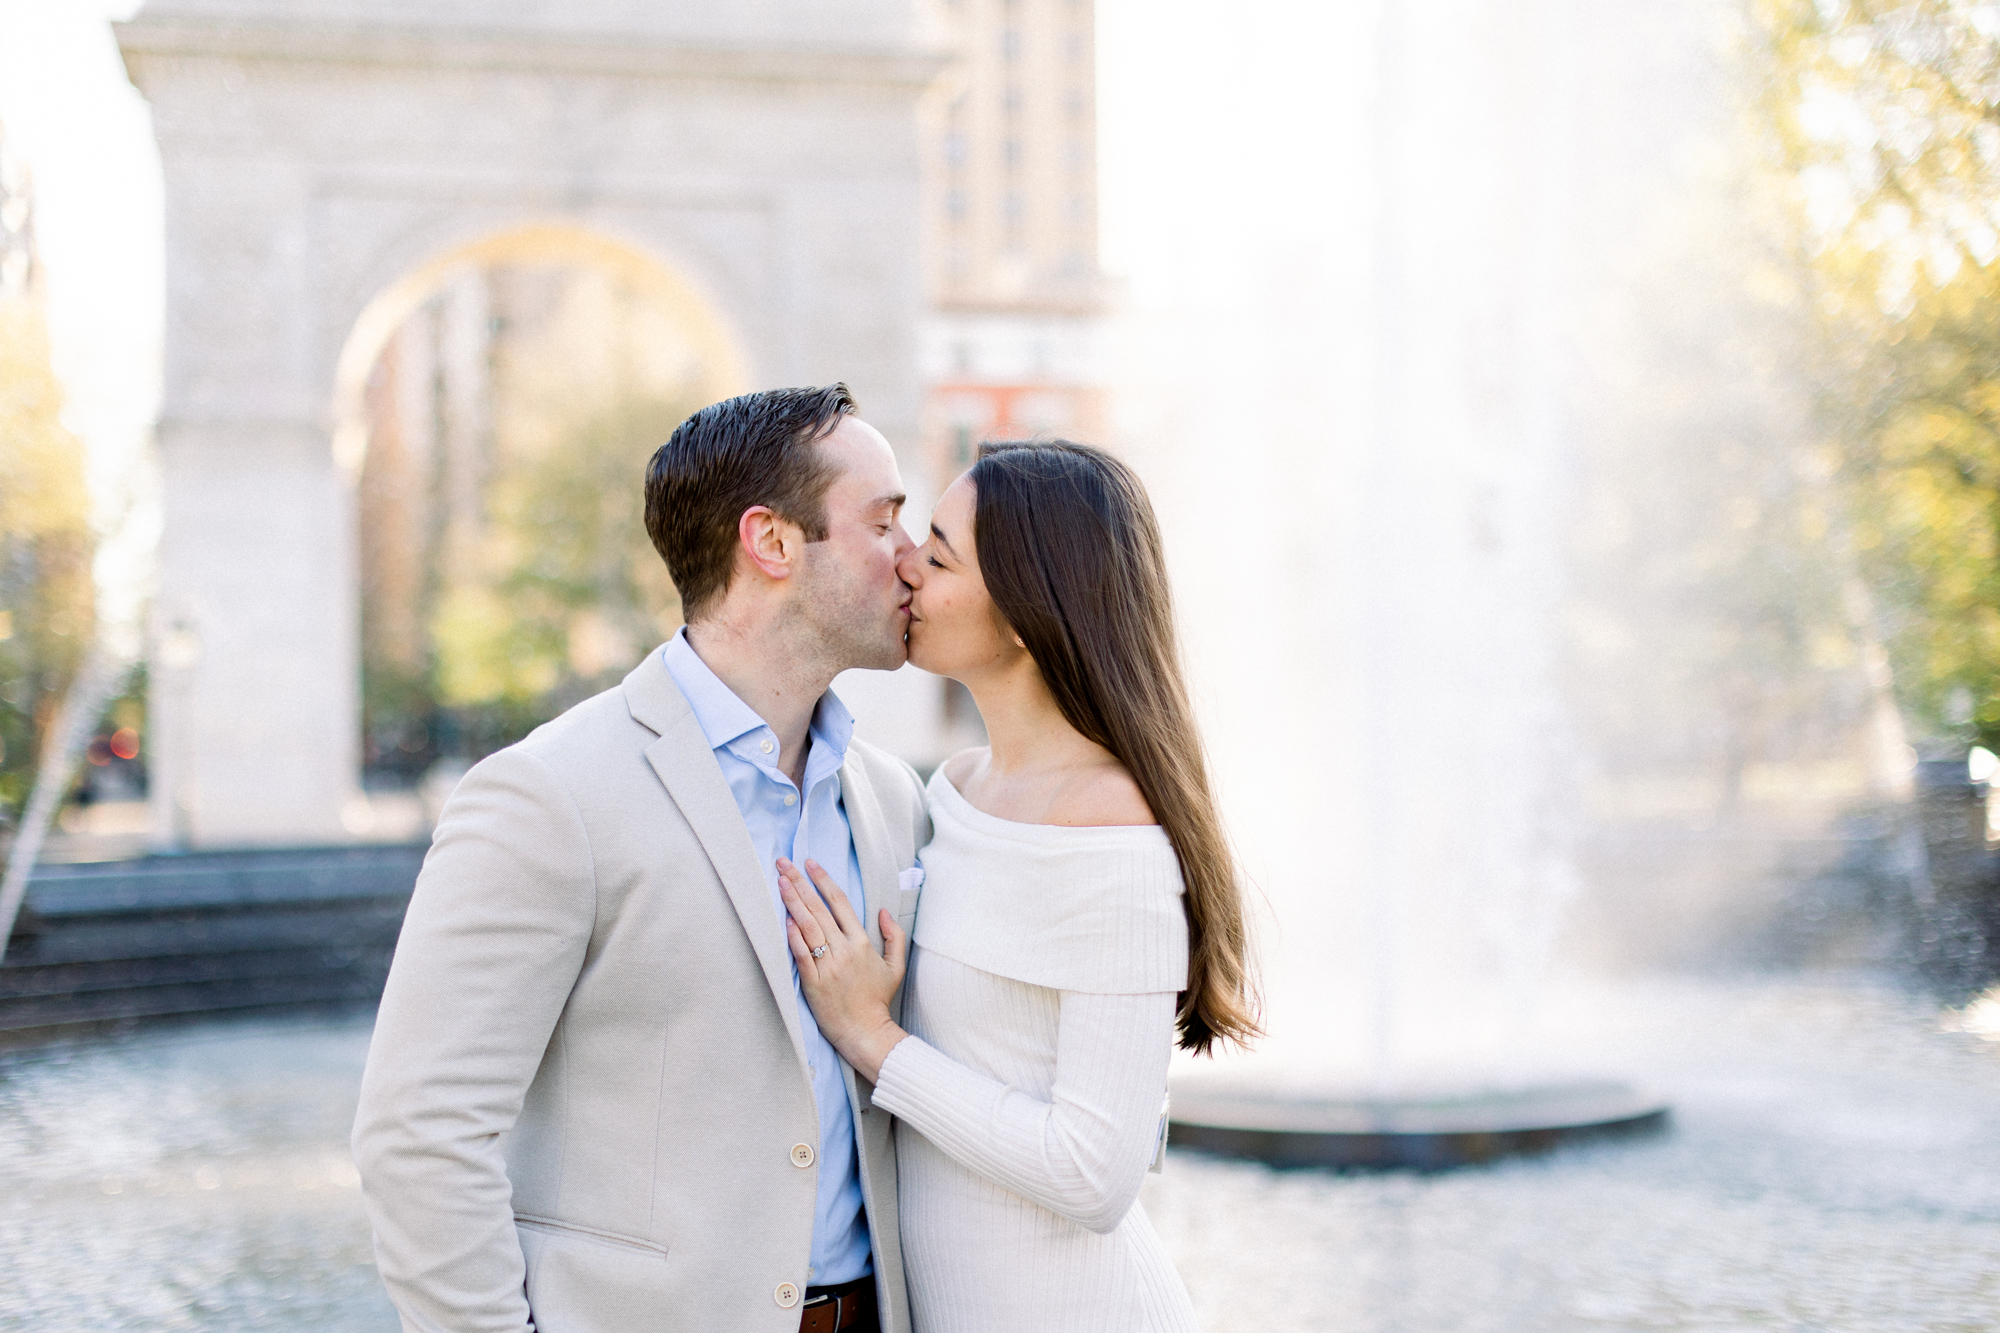 Romantic Spring Engagement Photos in Washington Square Park NYC